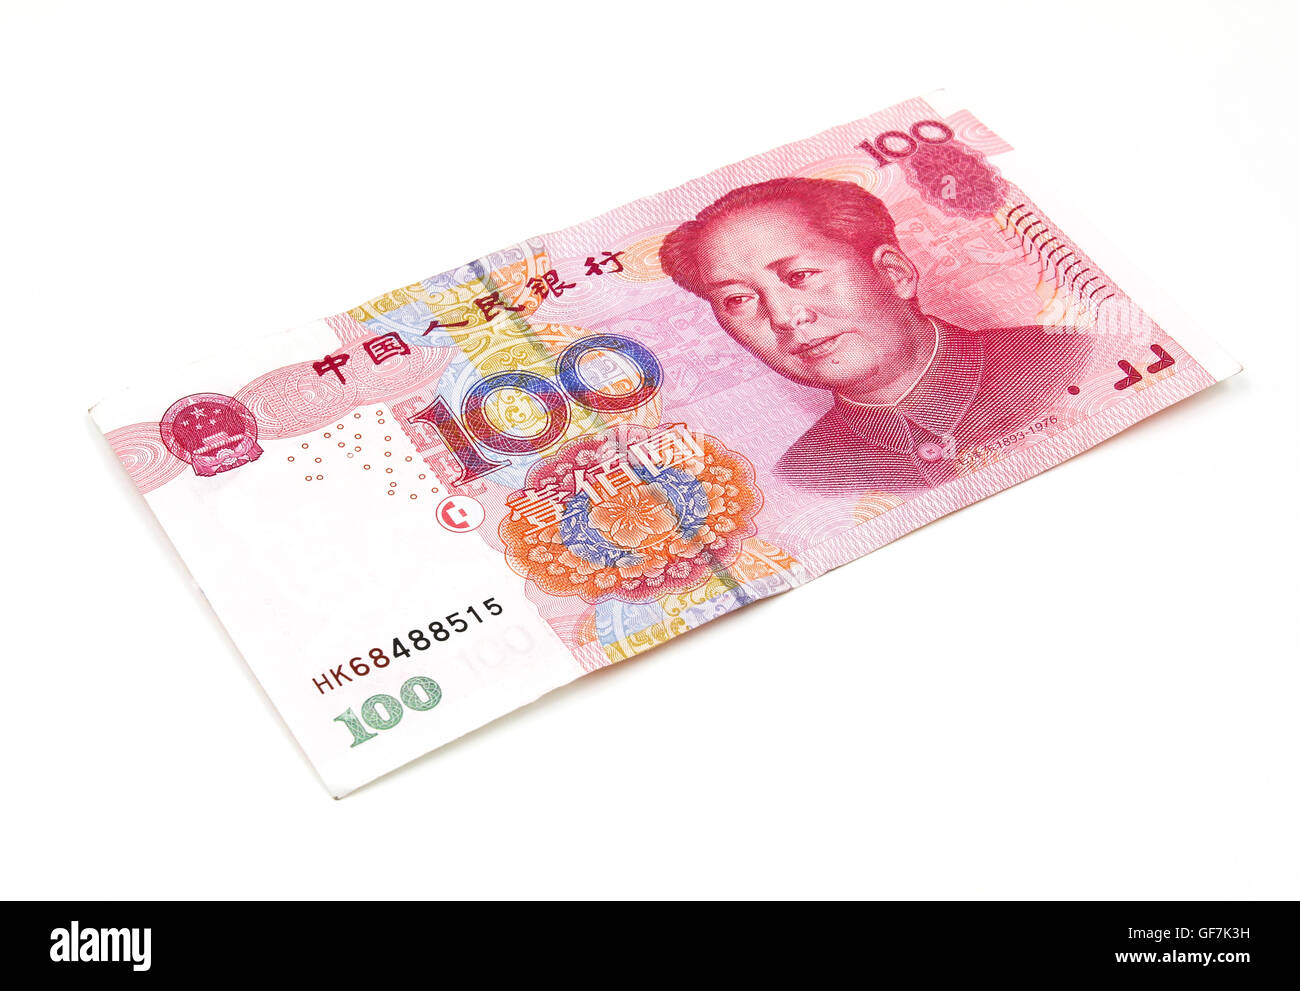 Chinesische Yuan Geld 100 banknote Stockfoto